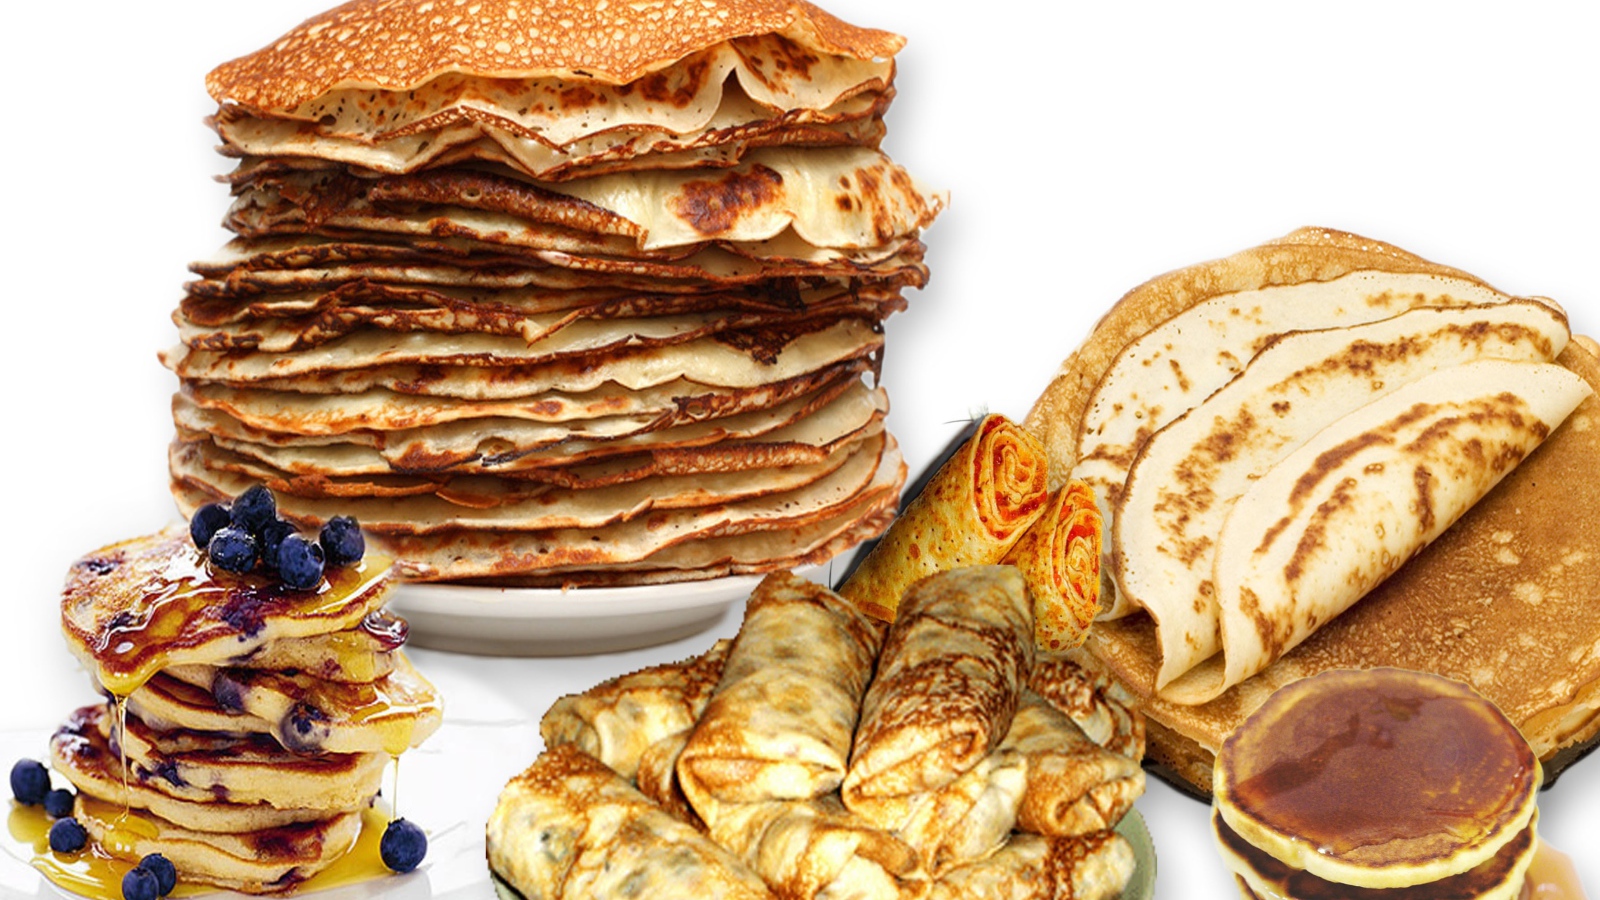 Abundance of pancakes on Shrove Tuesday